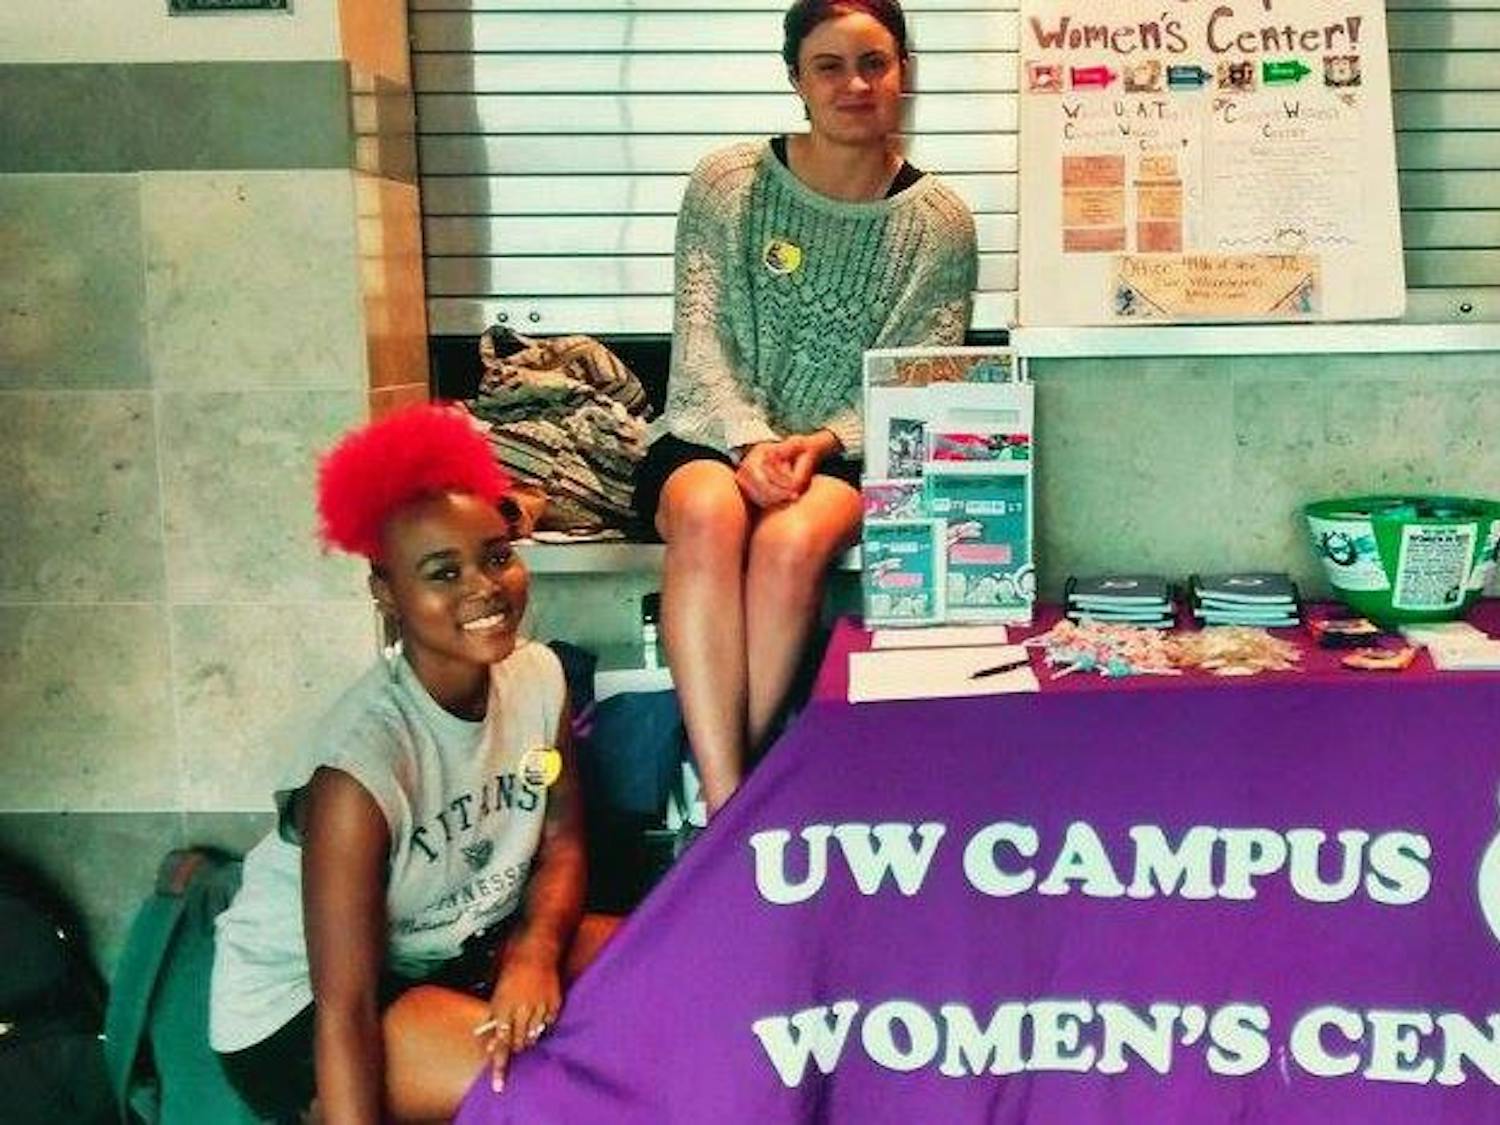 Campus Women's Center